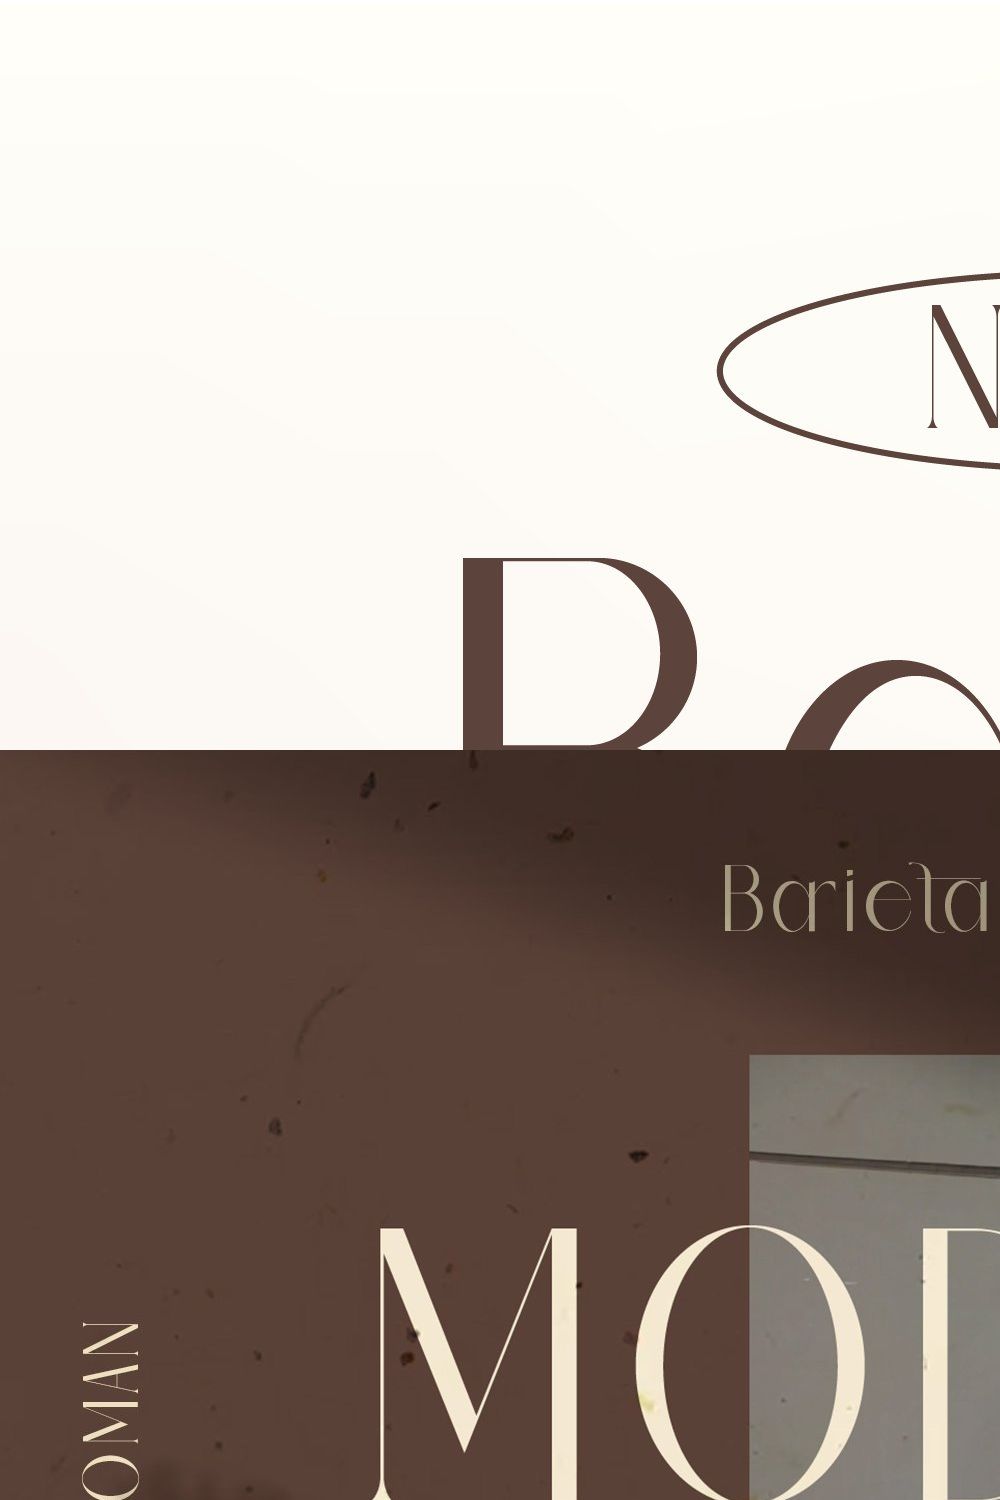 Barieta Elegant Typeface pinterest preview image.